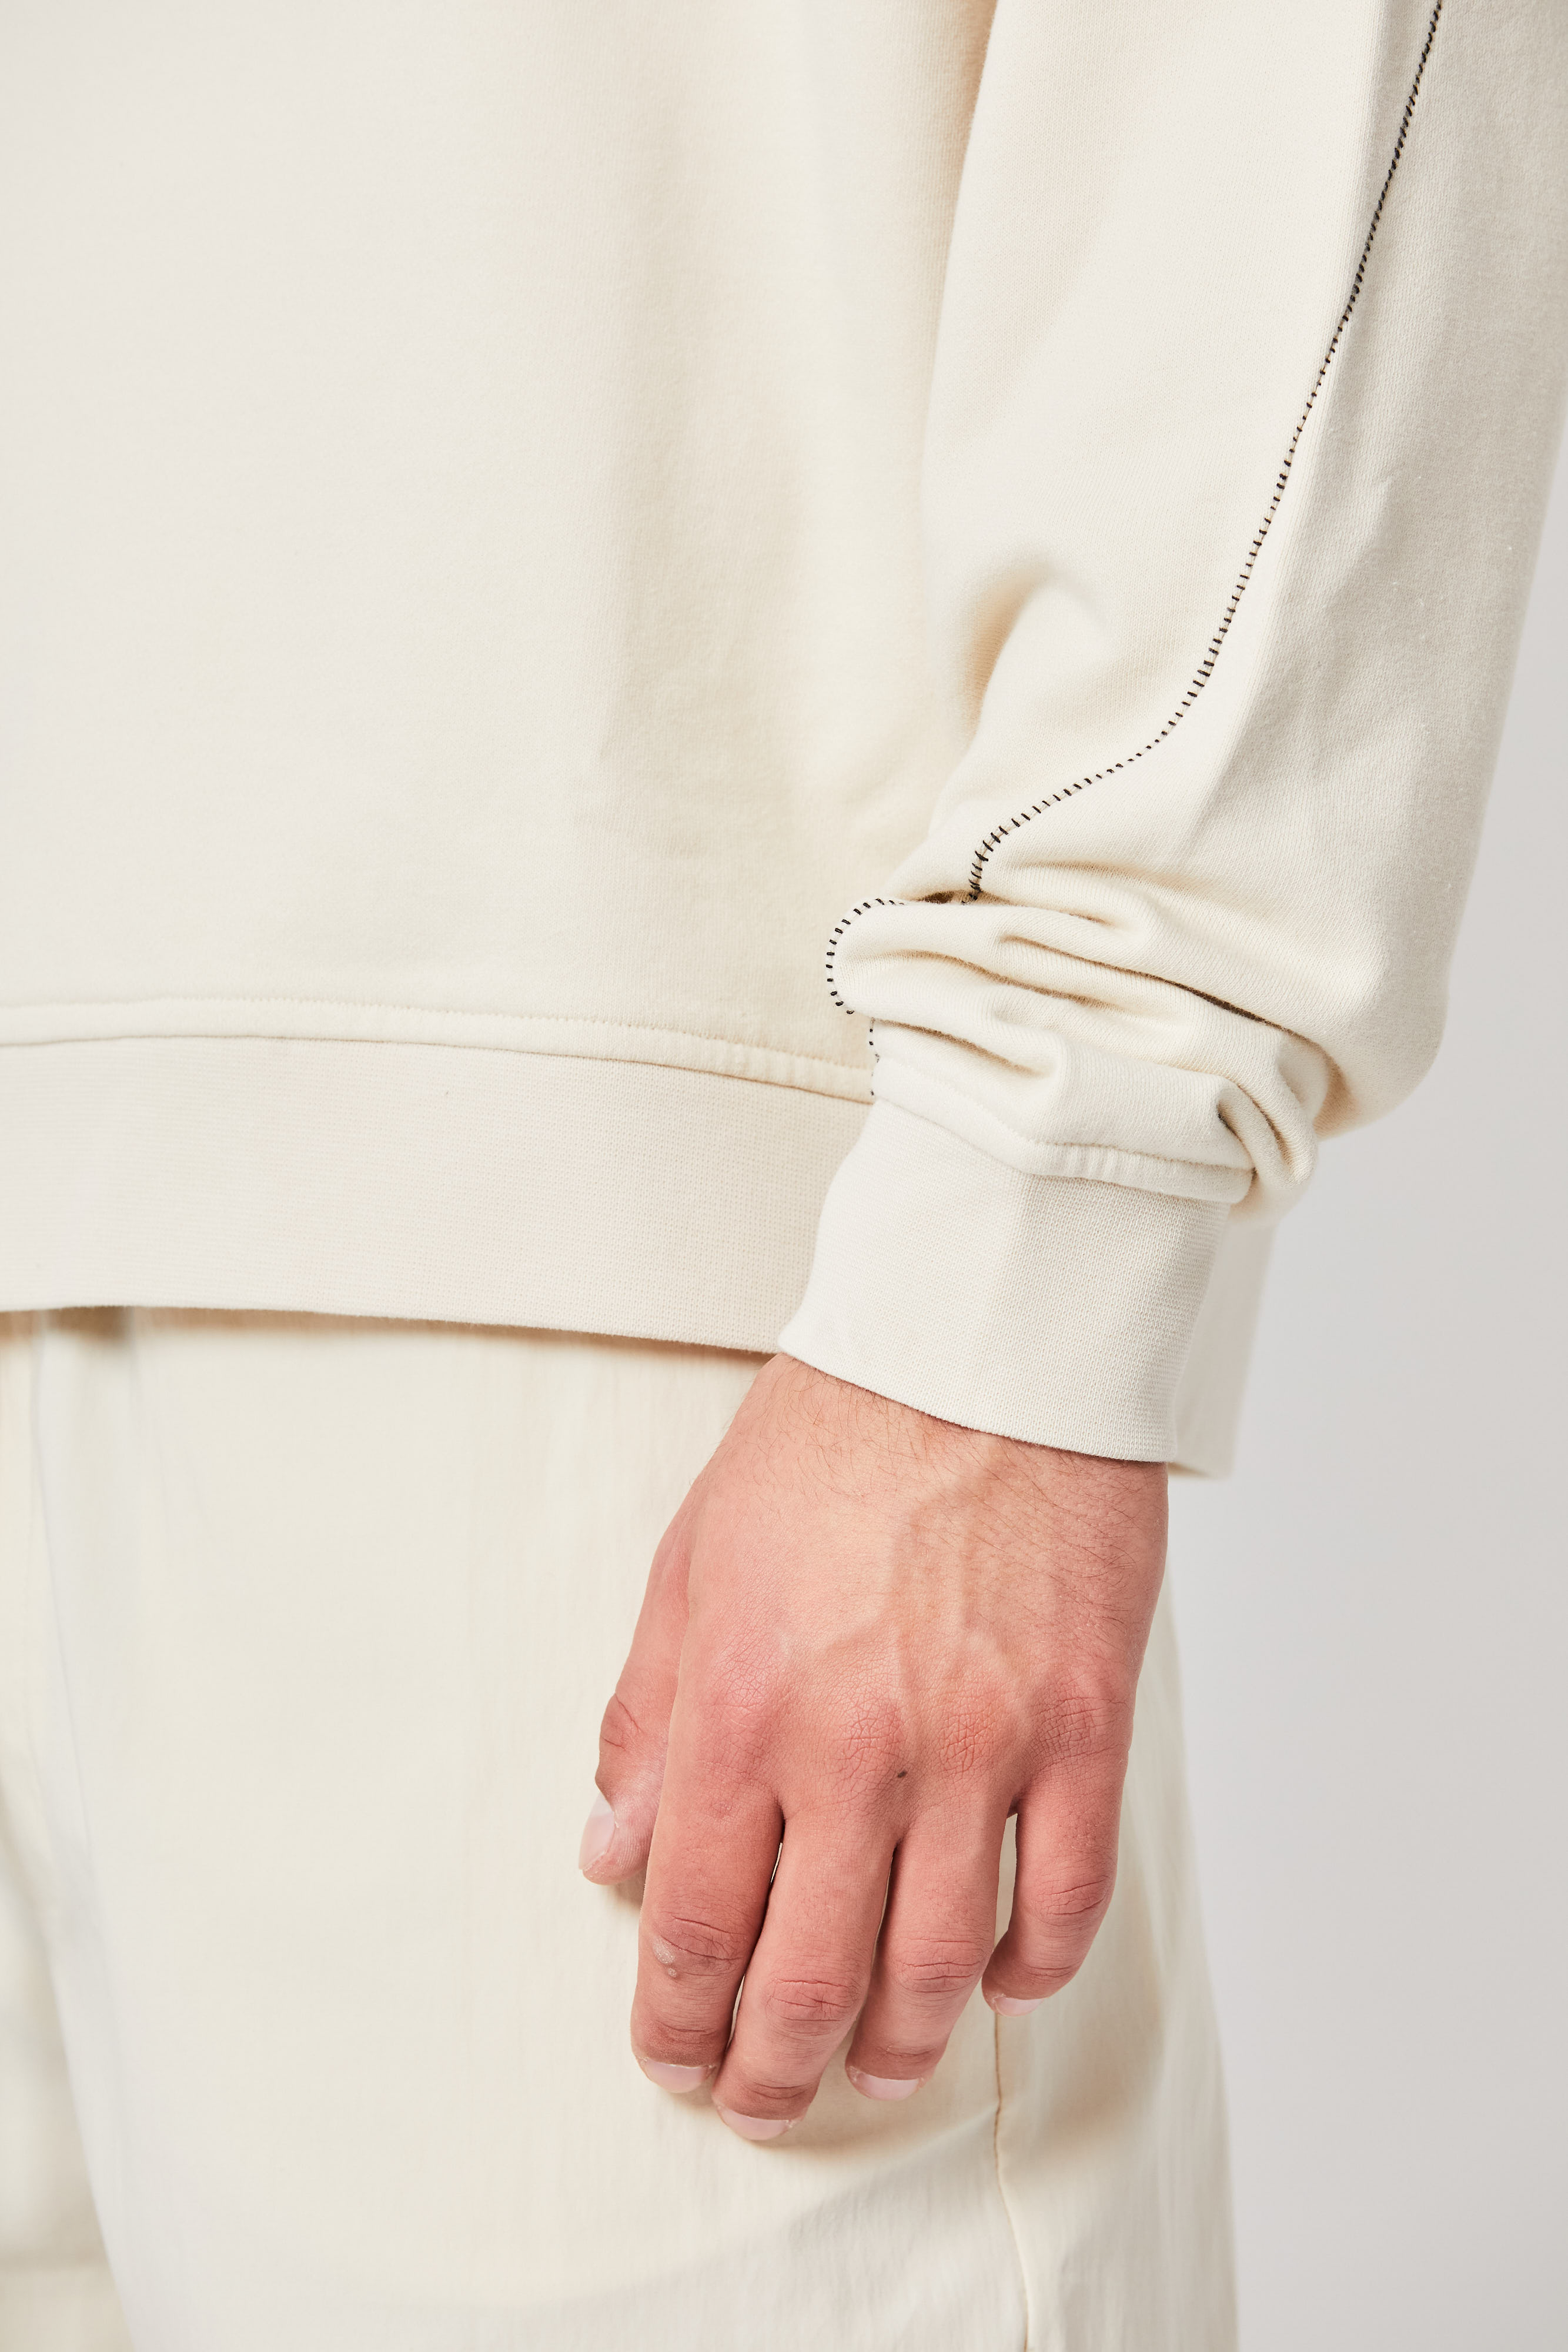 Thom Krom Oversize Sweatshirt in Ivory